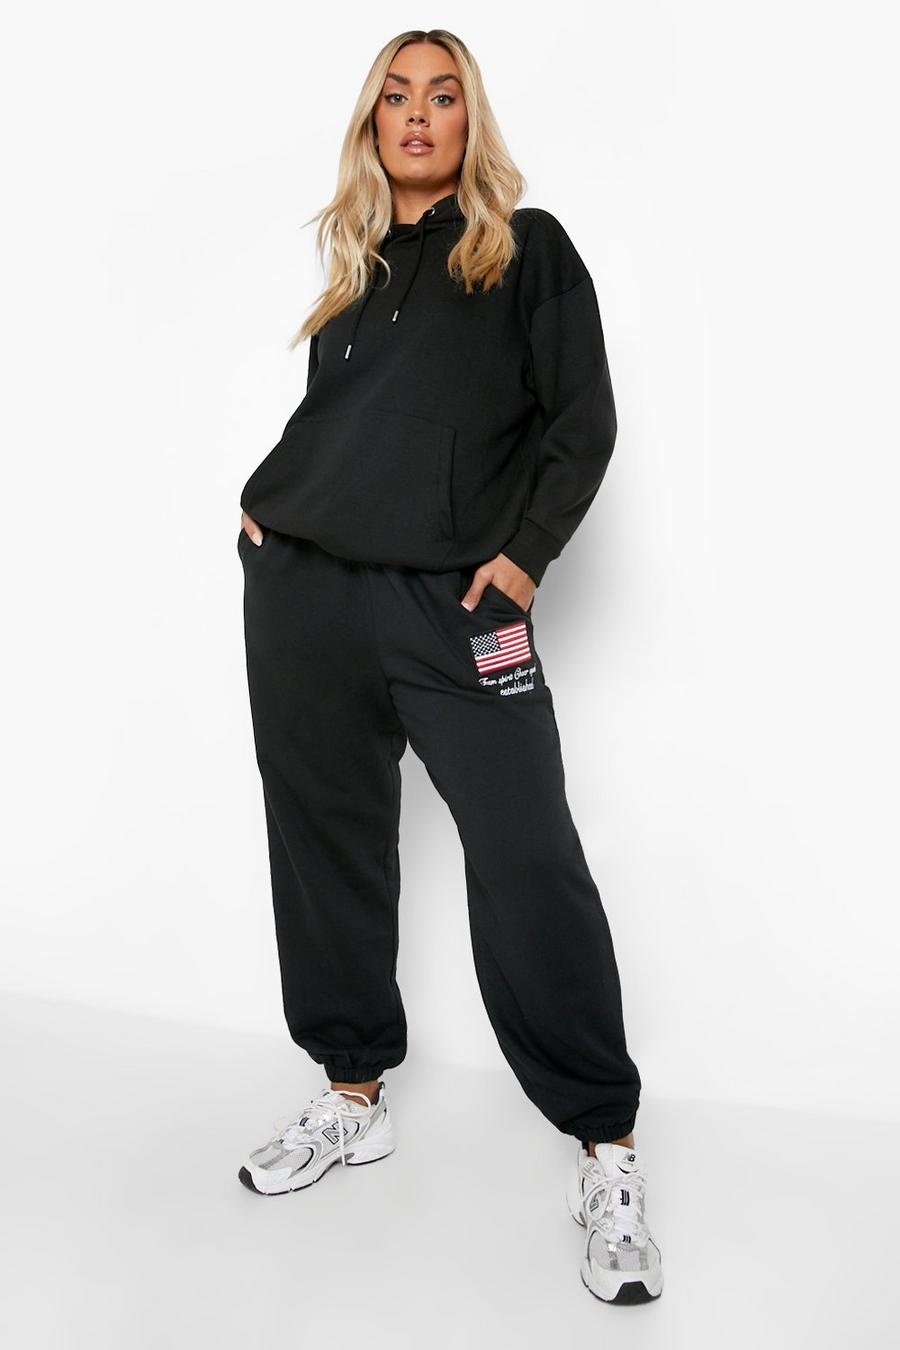 Pantaloni tuta Plus Size Official oversize con ricami, Black negro